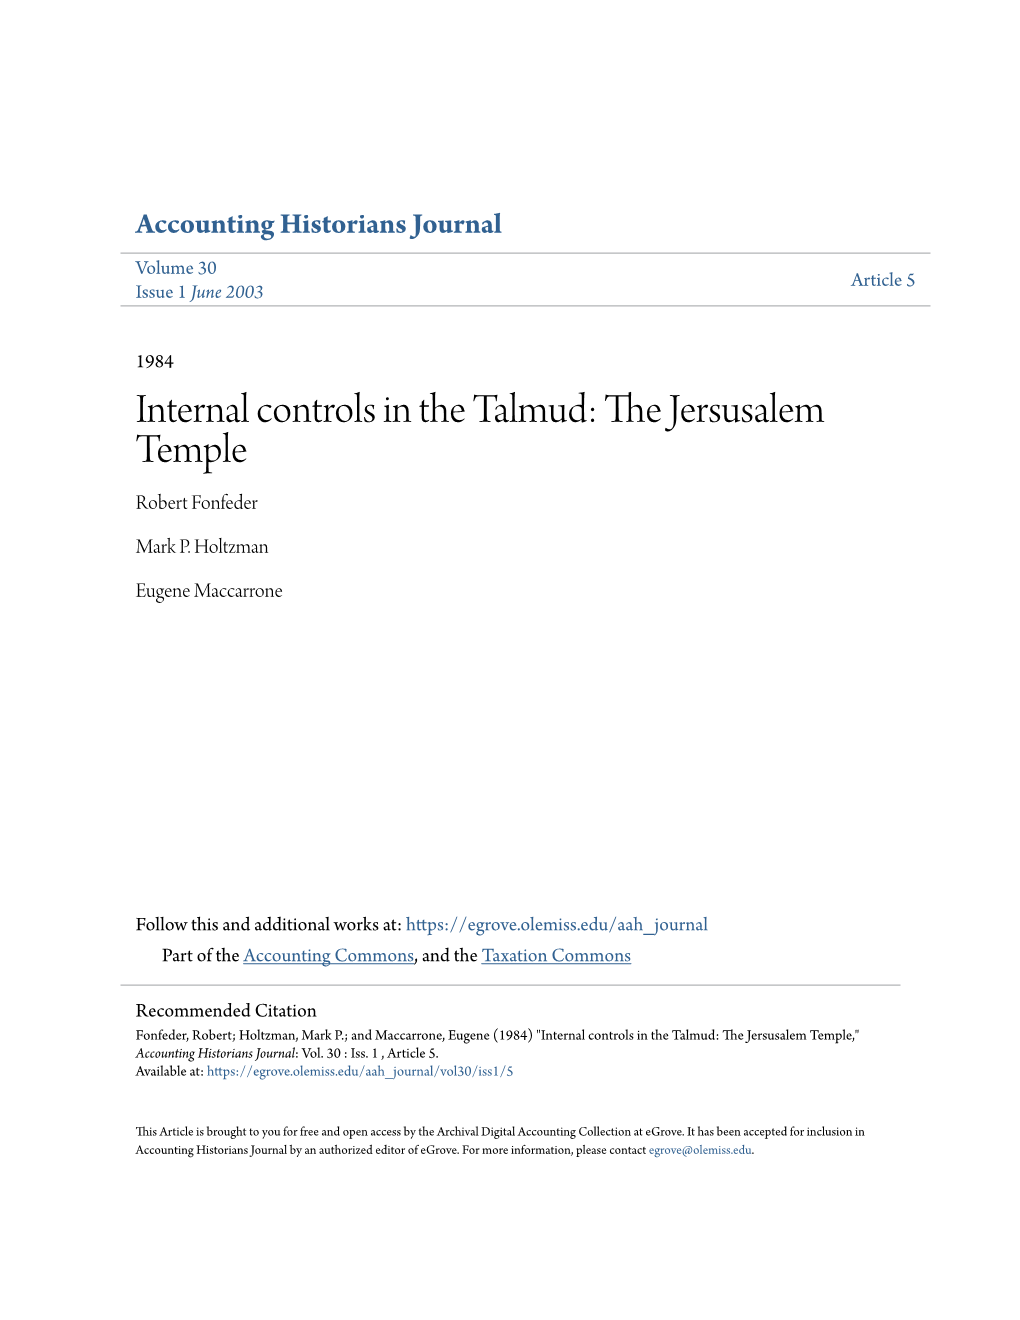 Internal Controls in the Talmud: the Ej Rsusalem Temple Robert Fonfeder